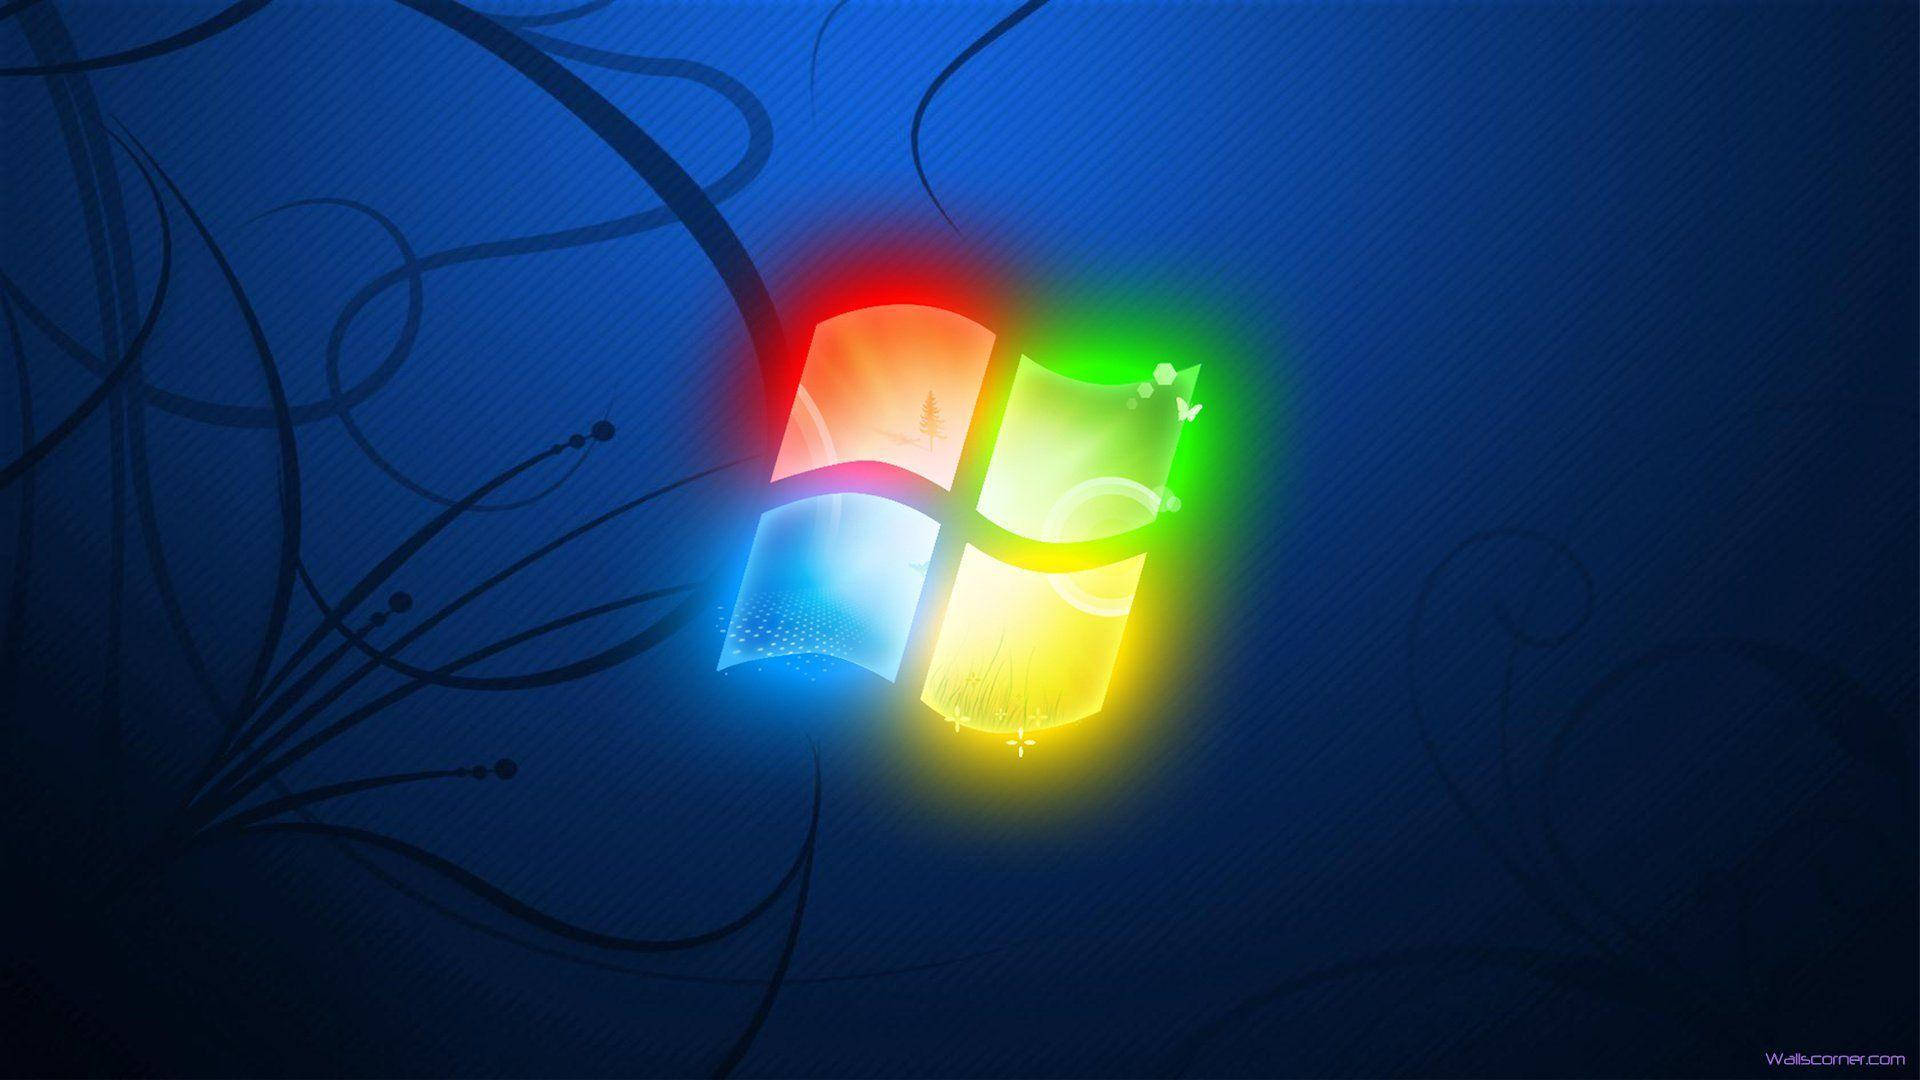 Windows 7 Logo In Neon